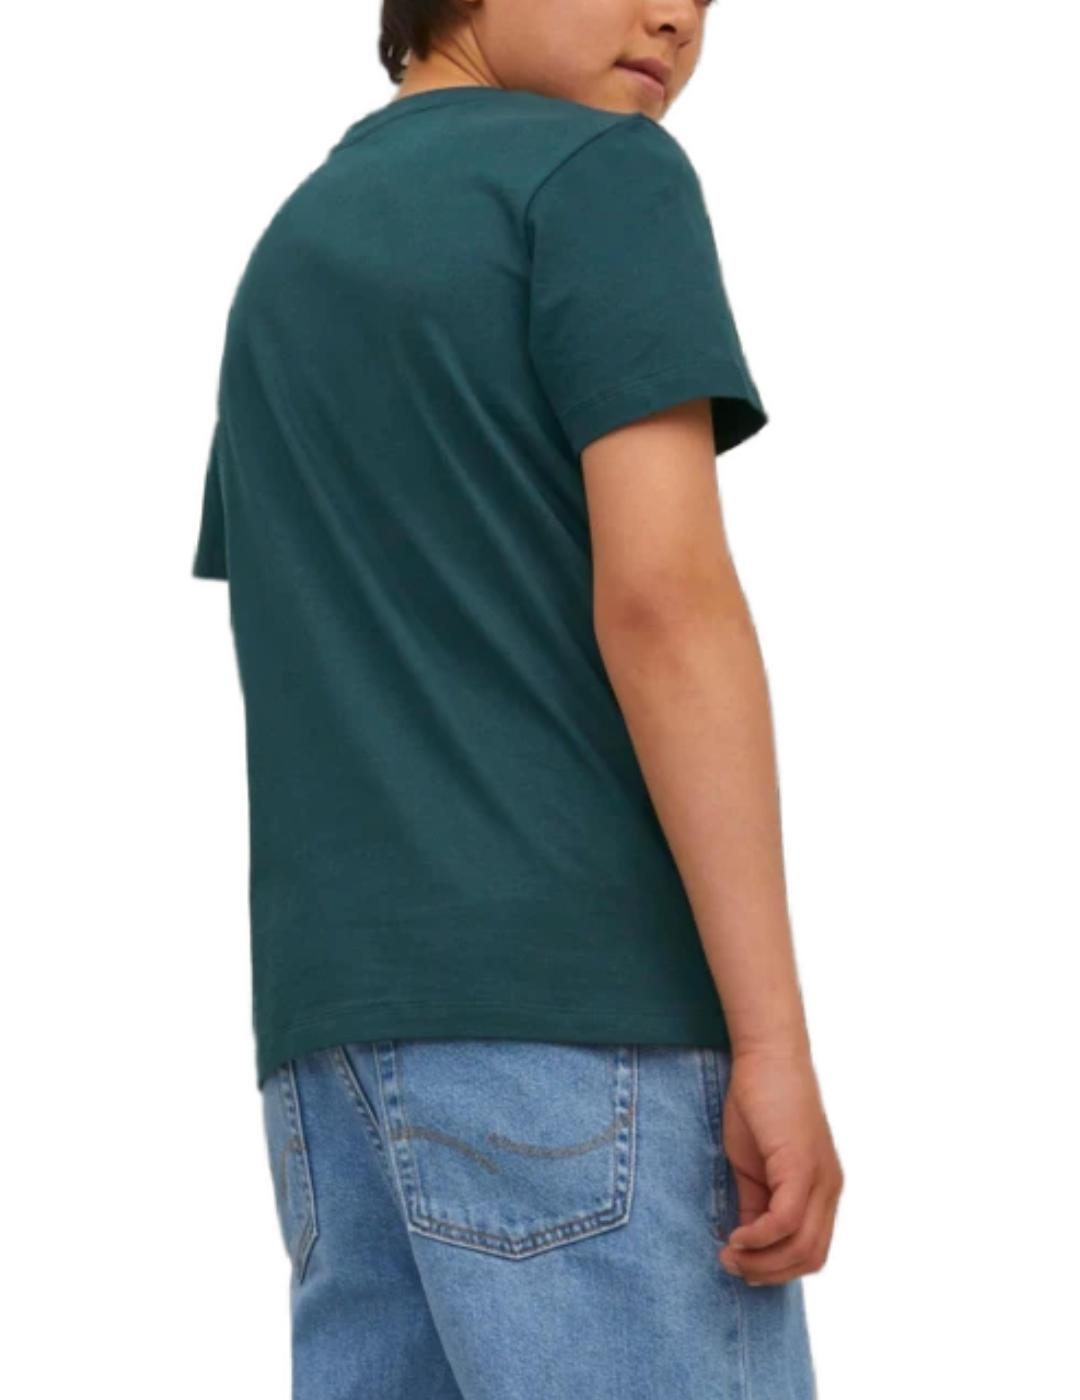 Camiseta Jack&Jones Junior Life verde mnaga corta de niño